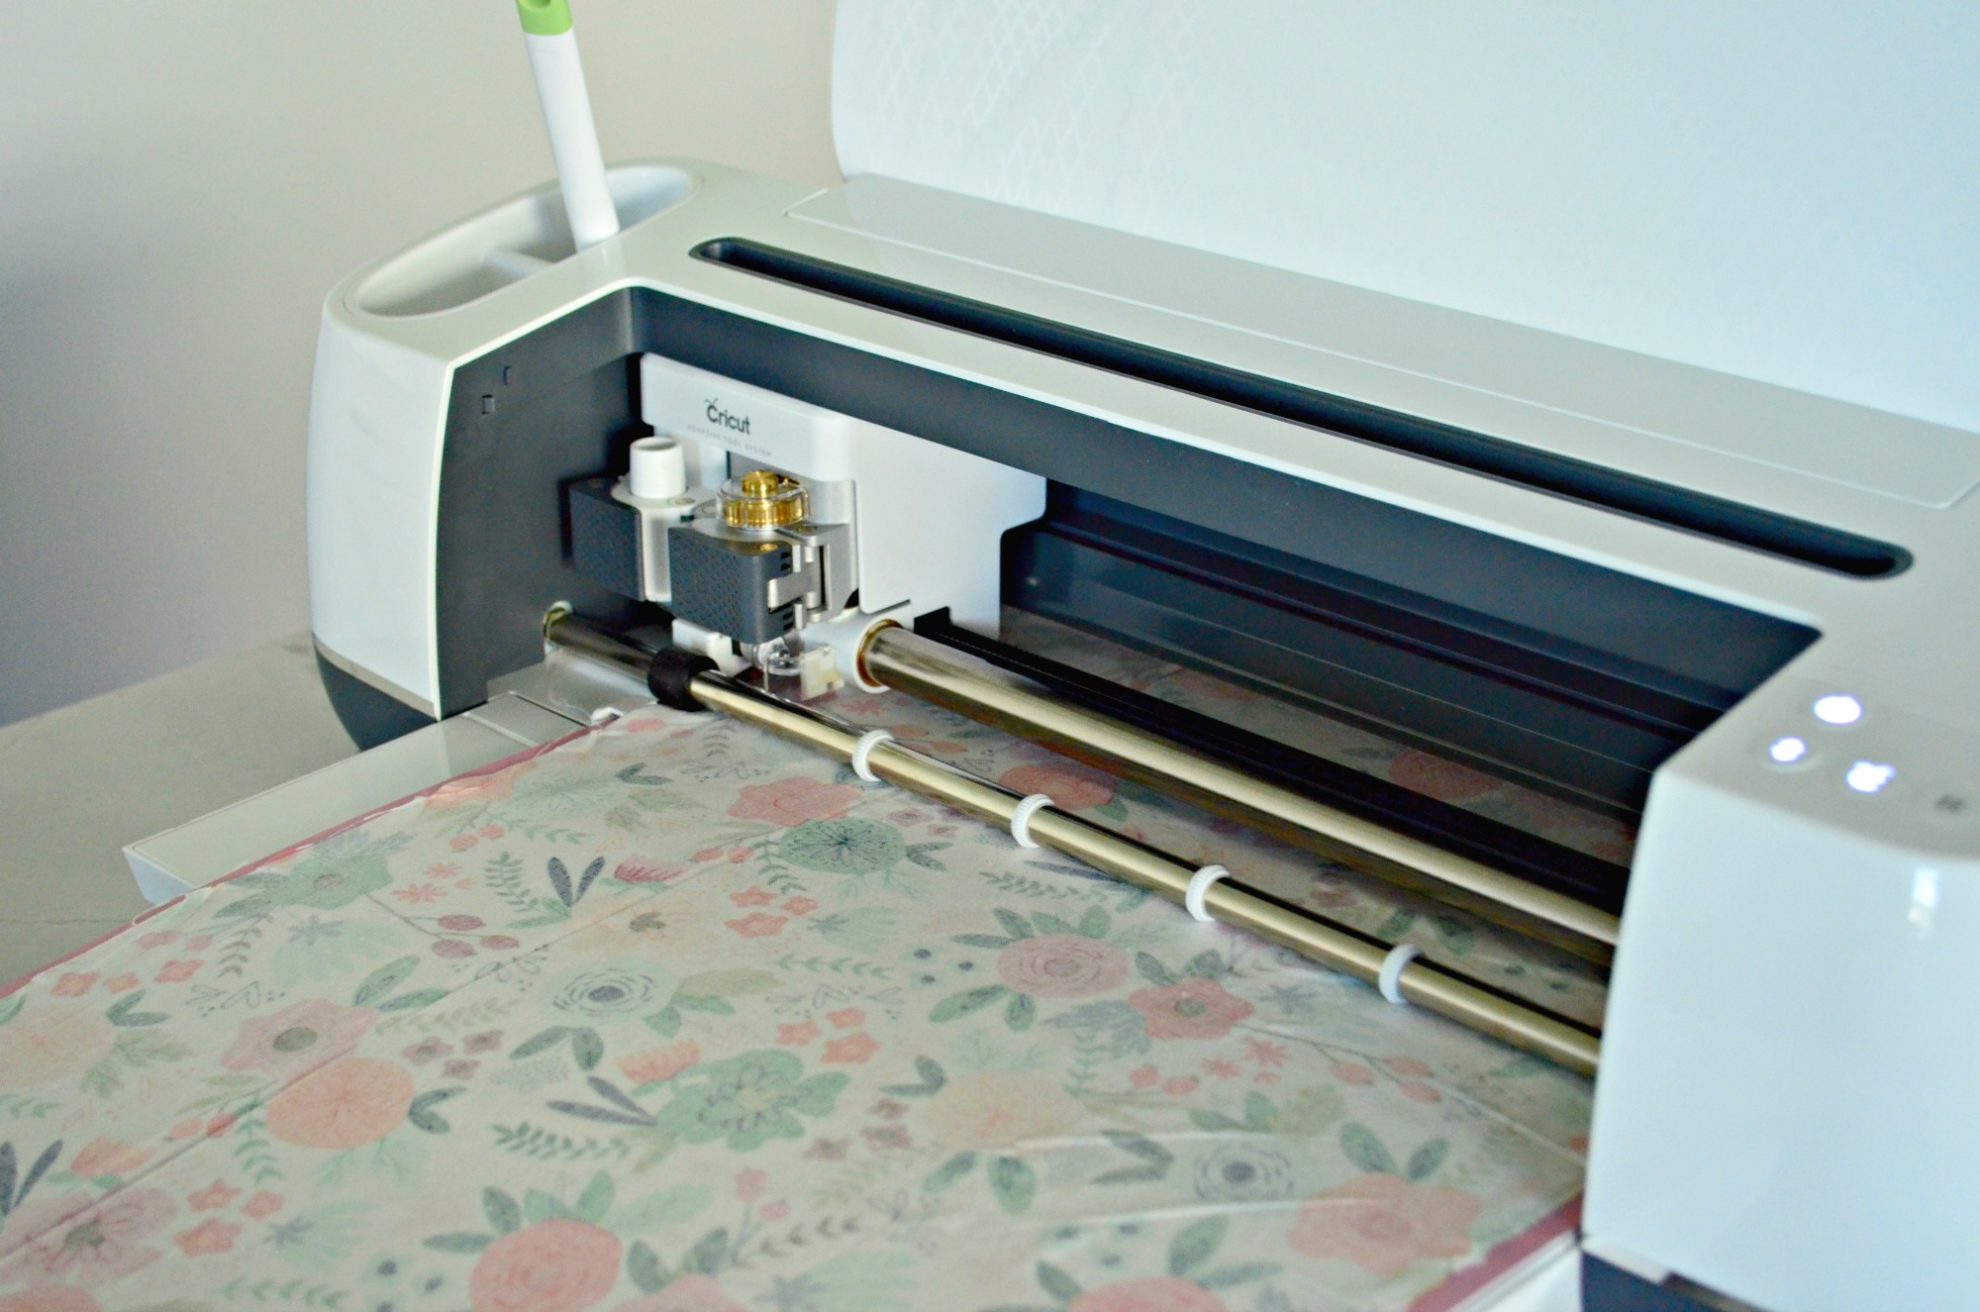 Cricut Maker Cutting Fabric